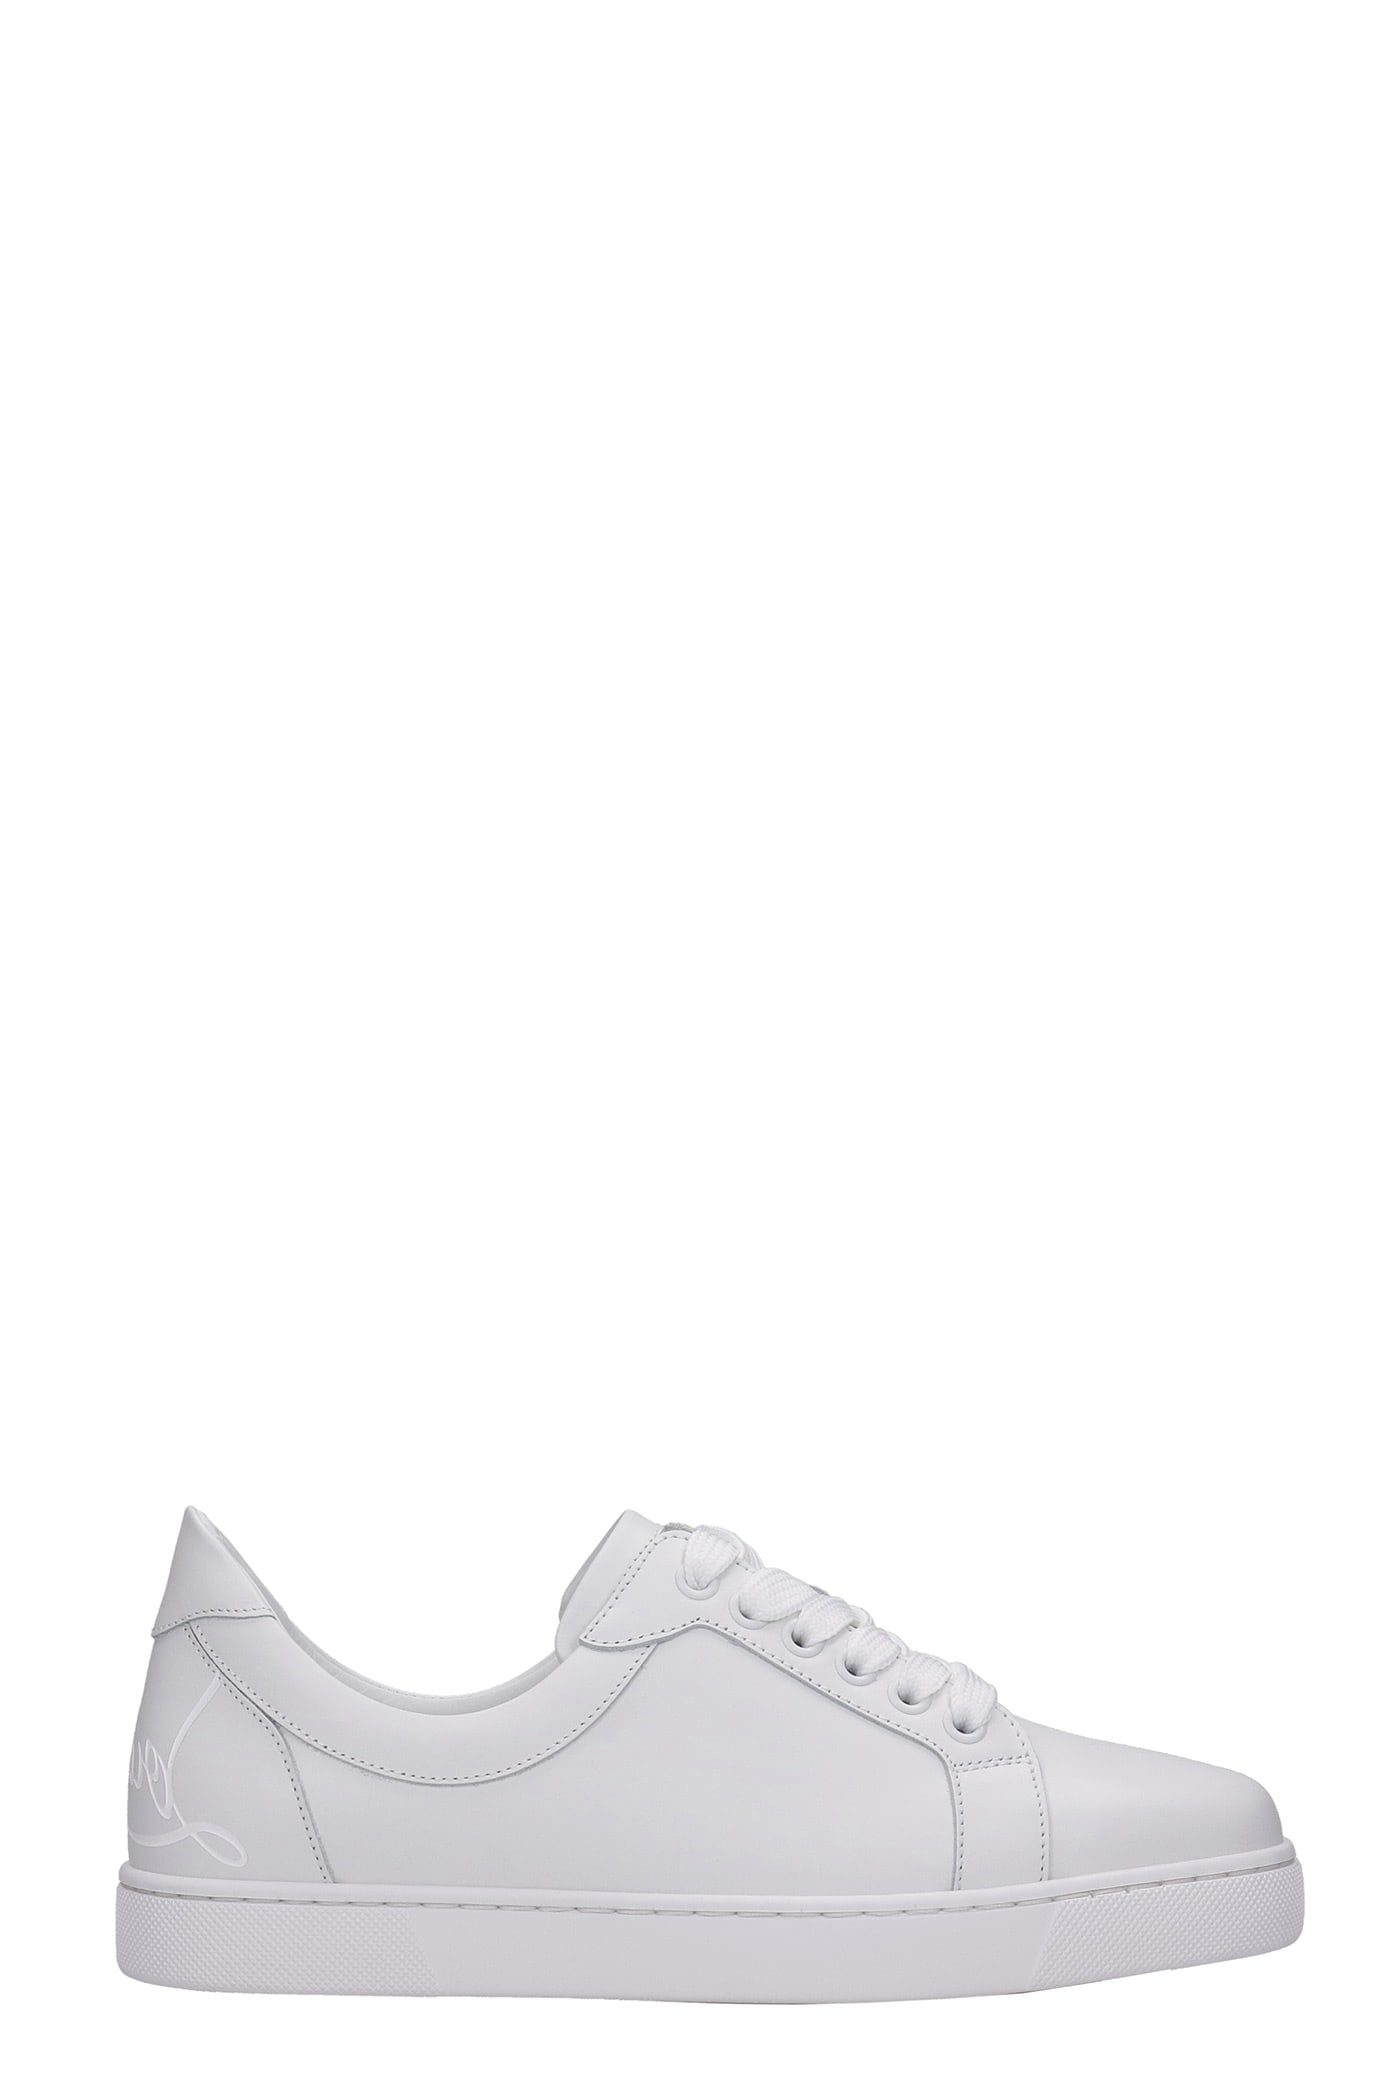 Christian Louboutin Elo Loubi Sneakers In White Leather